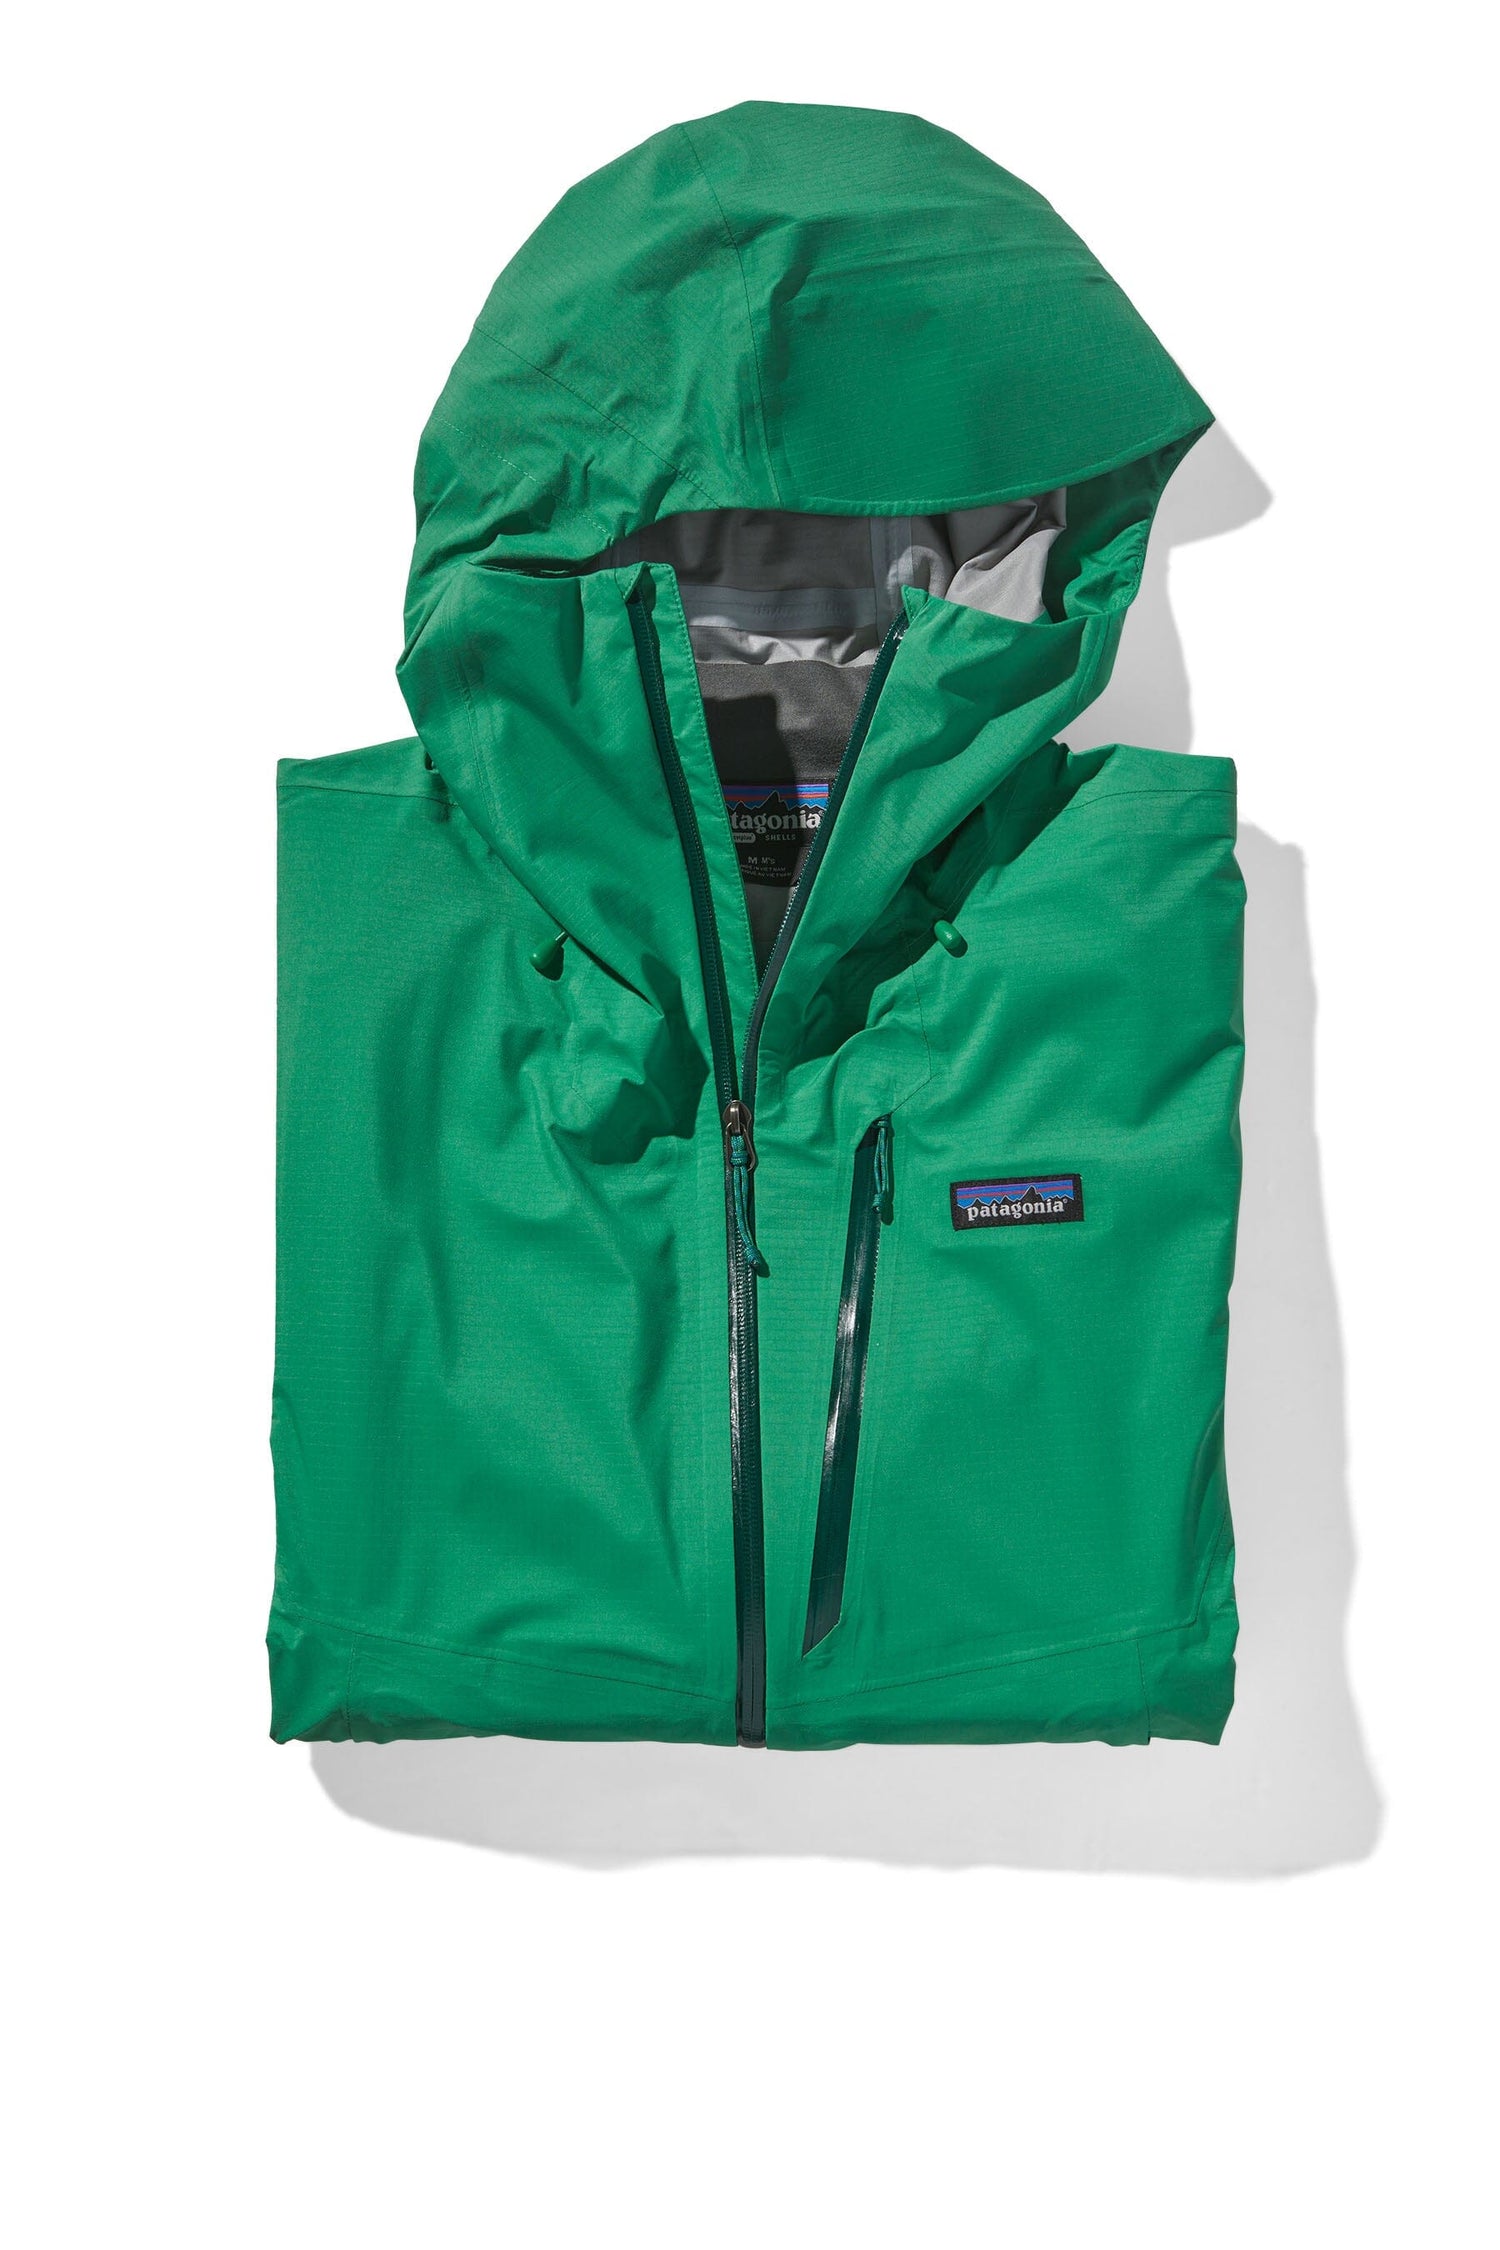 Patagonia - M's Granite Crest Shell Jacket - 100% Recycled Nylon - Weekendbee - sustainable sportswear